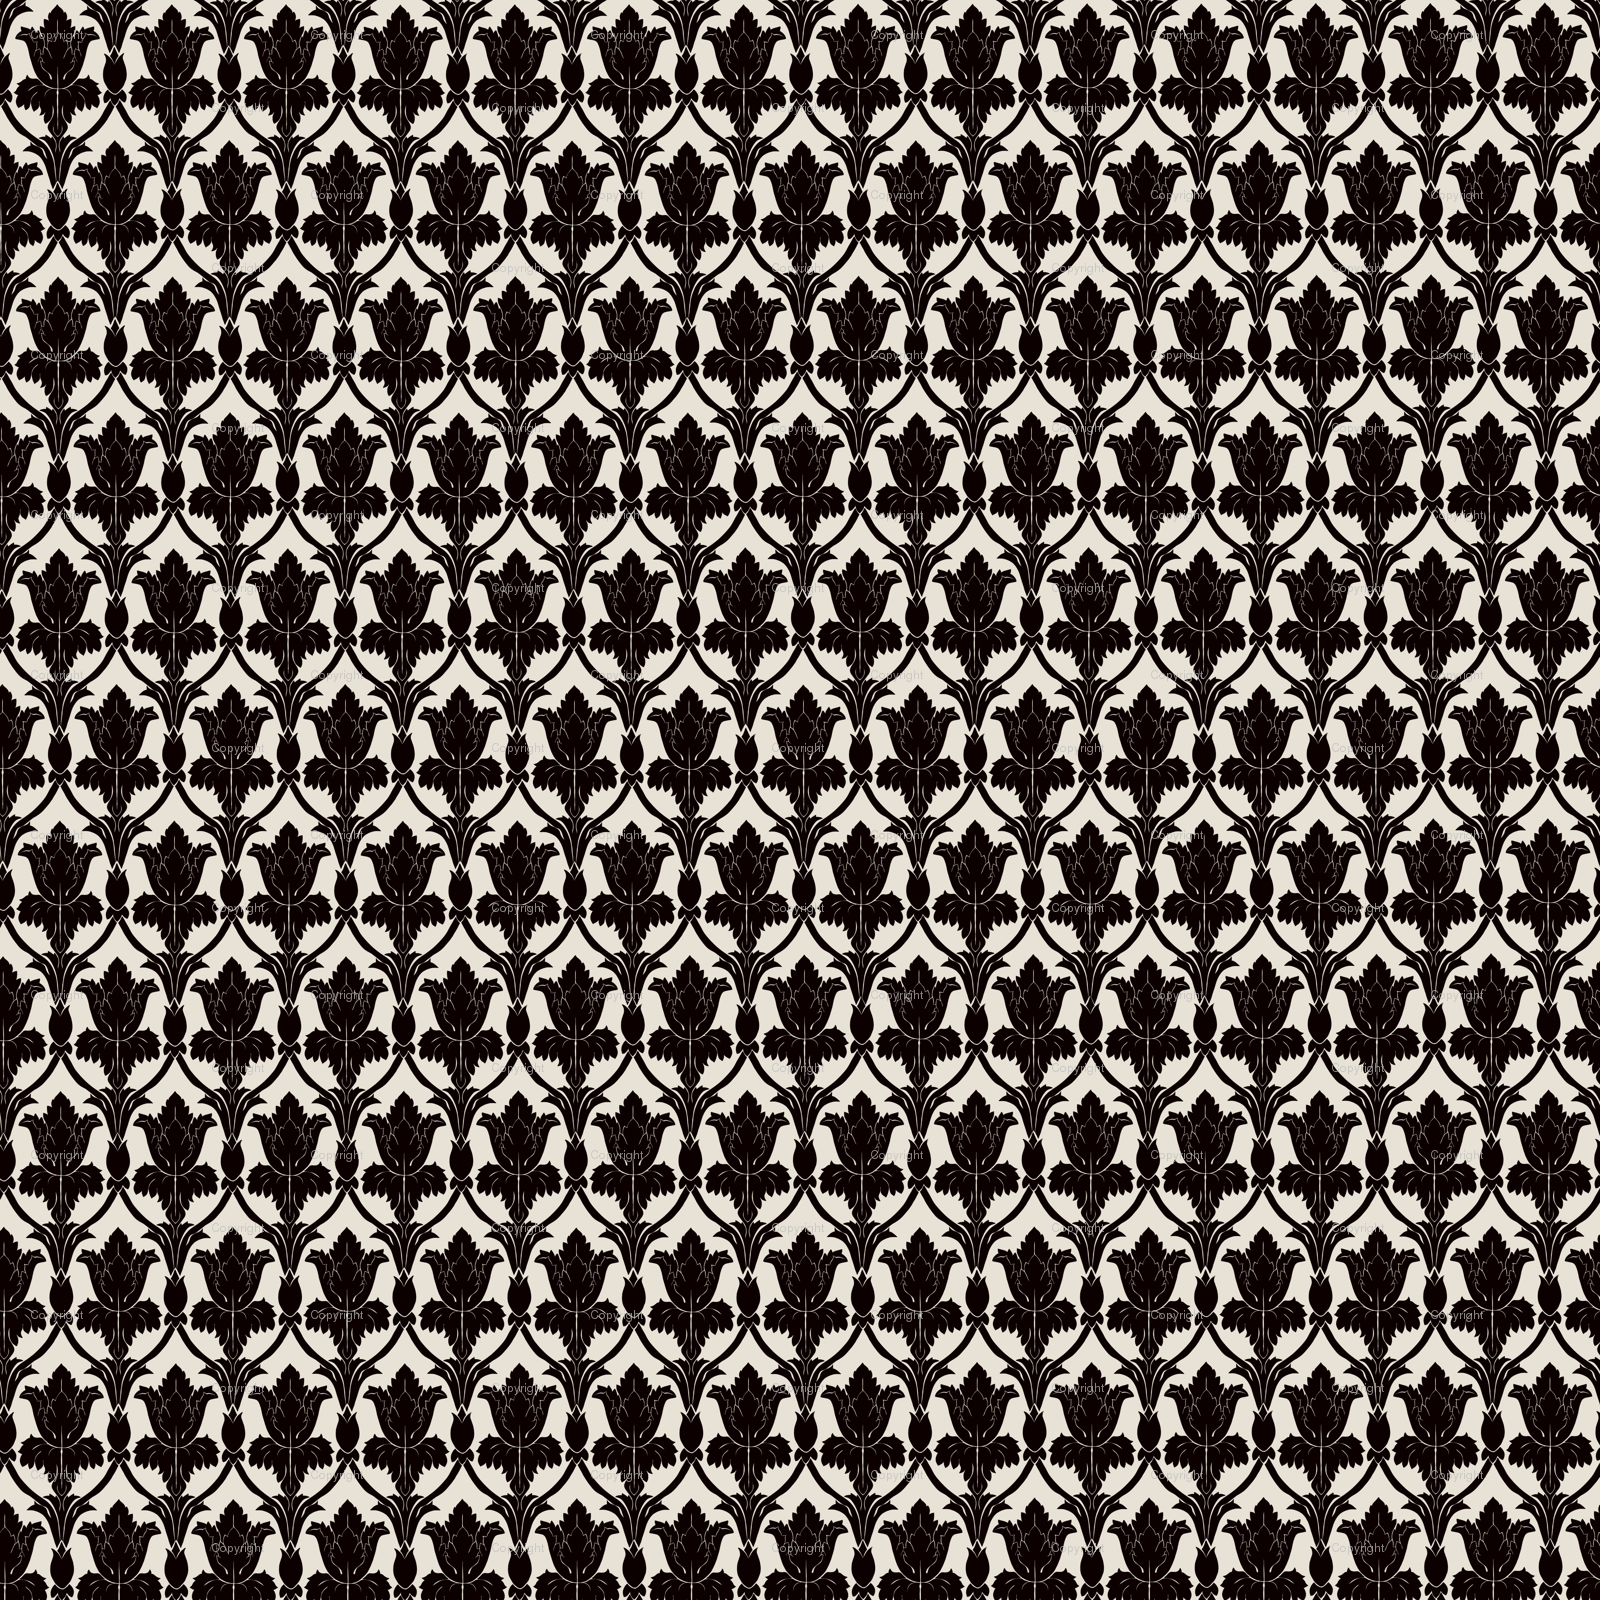 Bbc Sherlock Wallpaper Smiley Face 221b fabric wallpaper gift 1600x1600